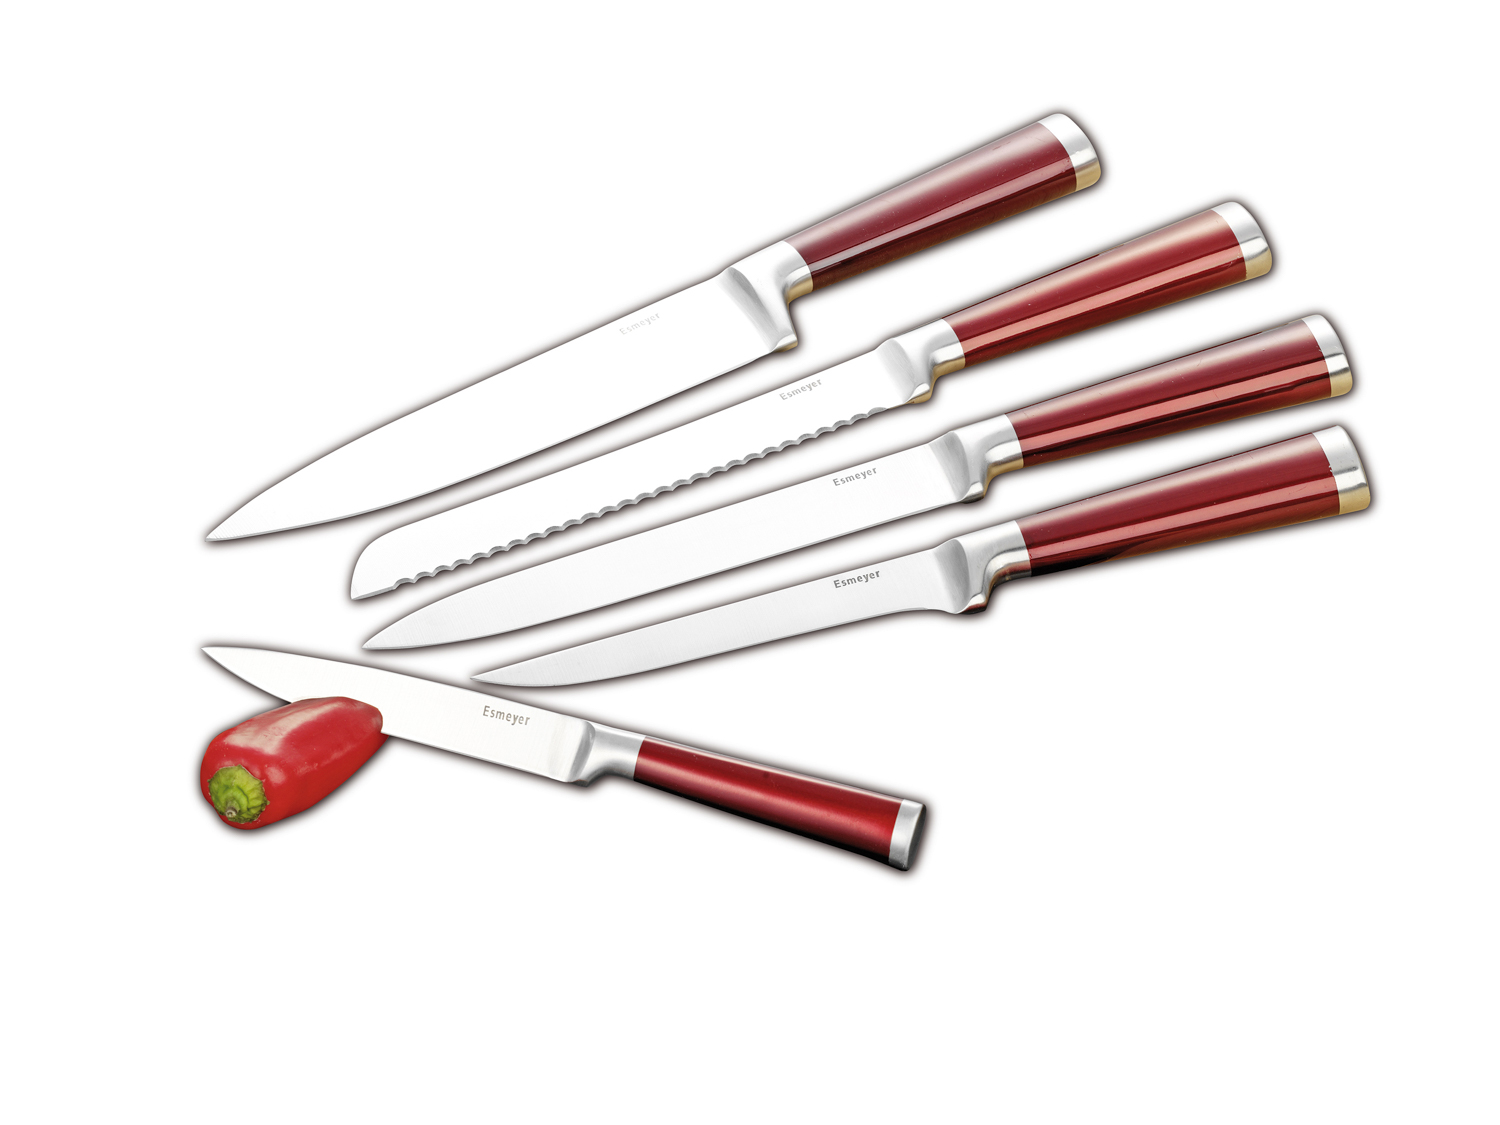 5-tlg. Sparset / Messerset MARVEL, Klingen aus Messerstahl gefertigt, Klingenstärke: 2.5 mm.